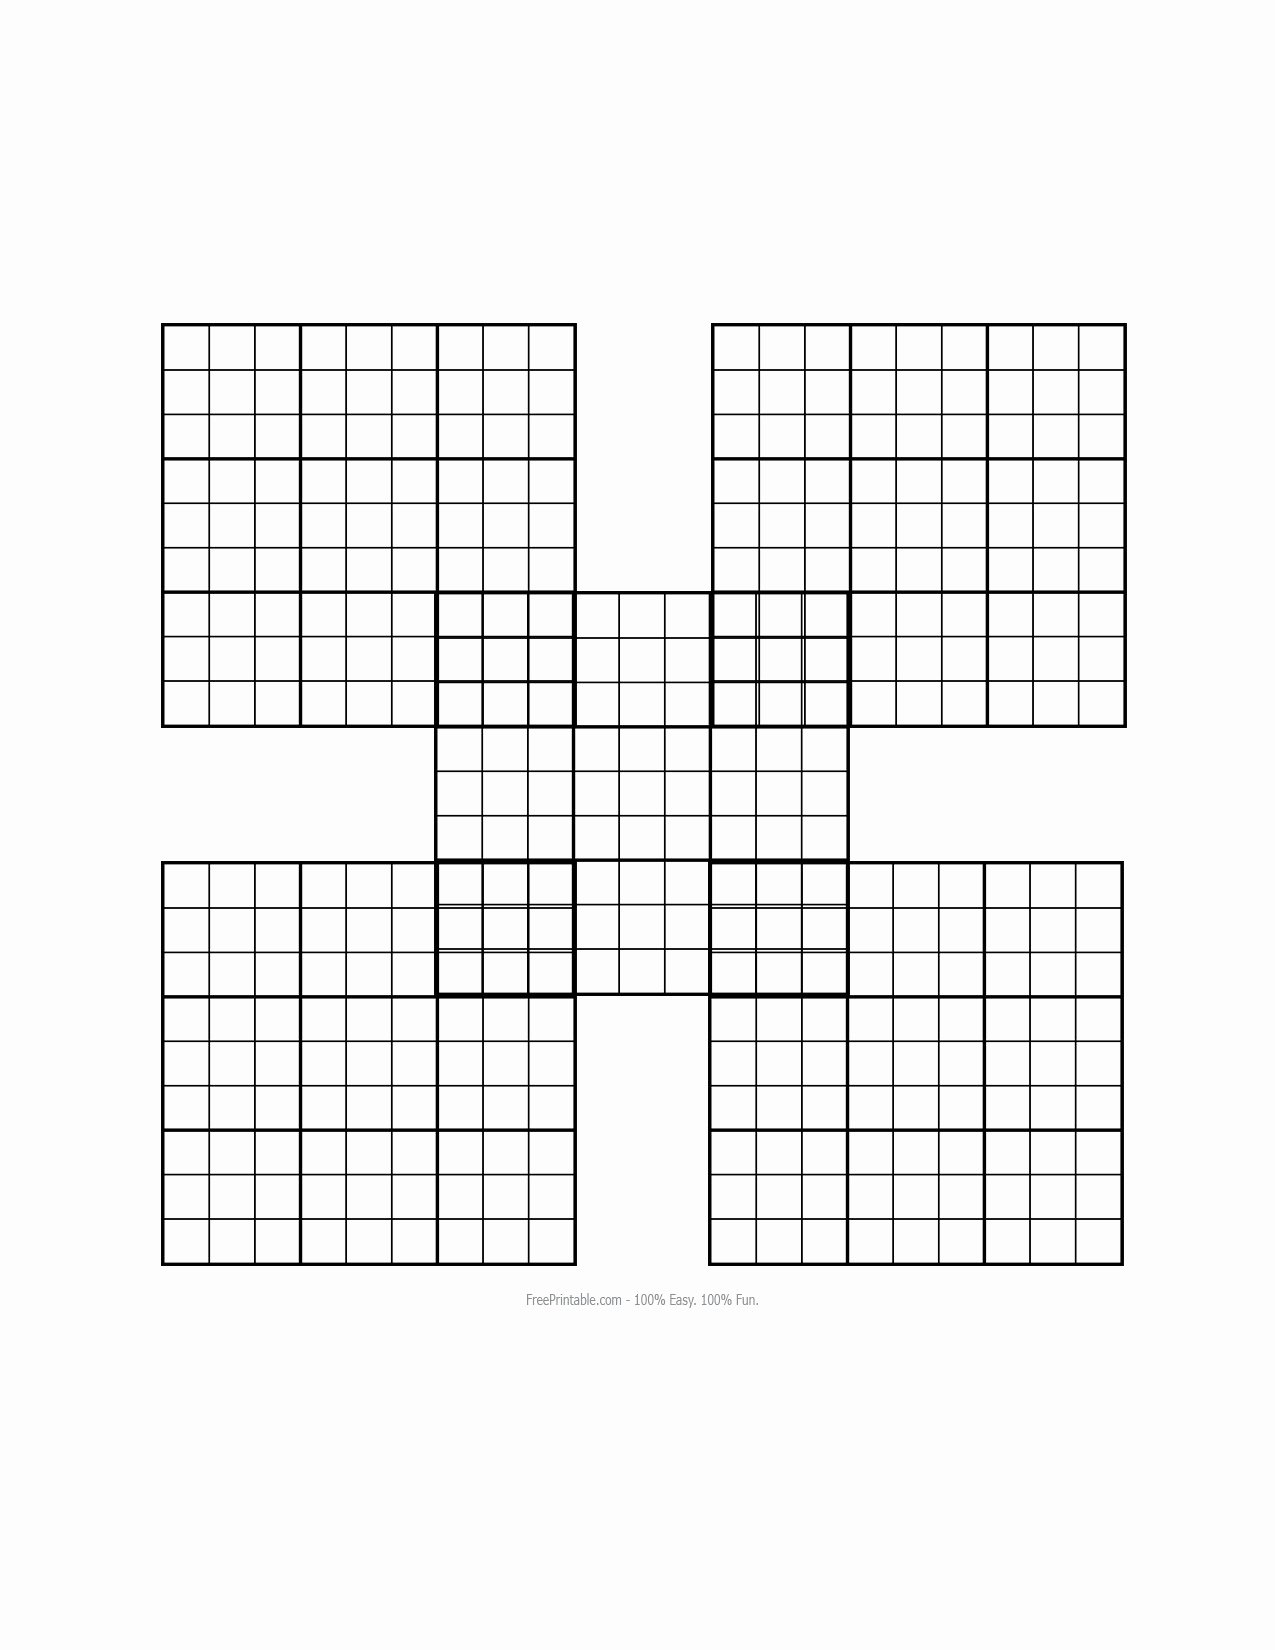 Blank Sudoku Grid Printable Lovely Blank Sudoku form Print